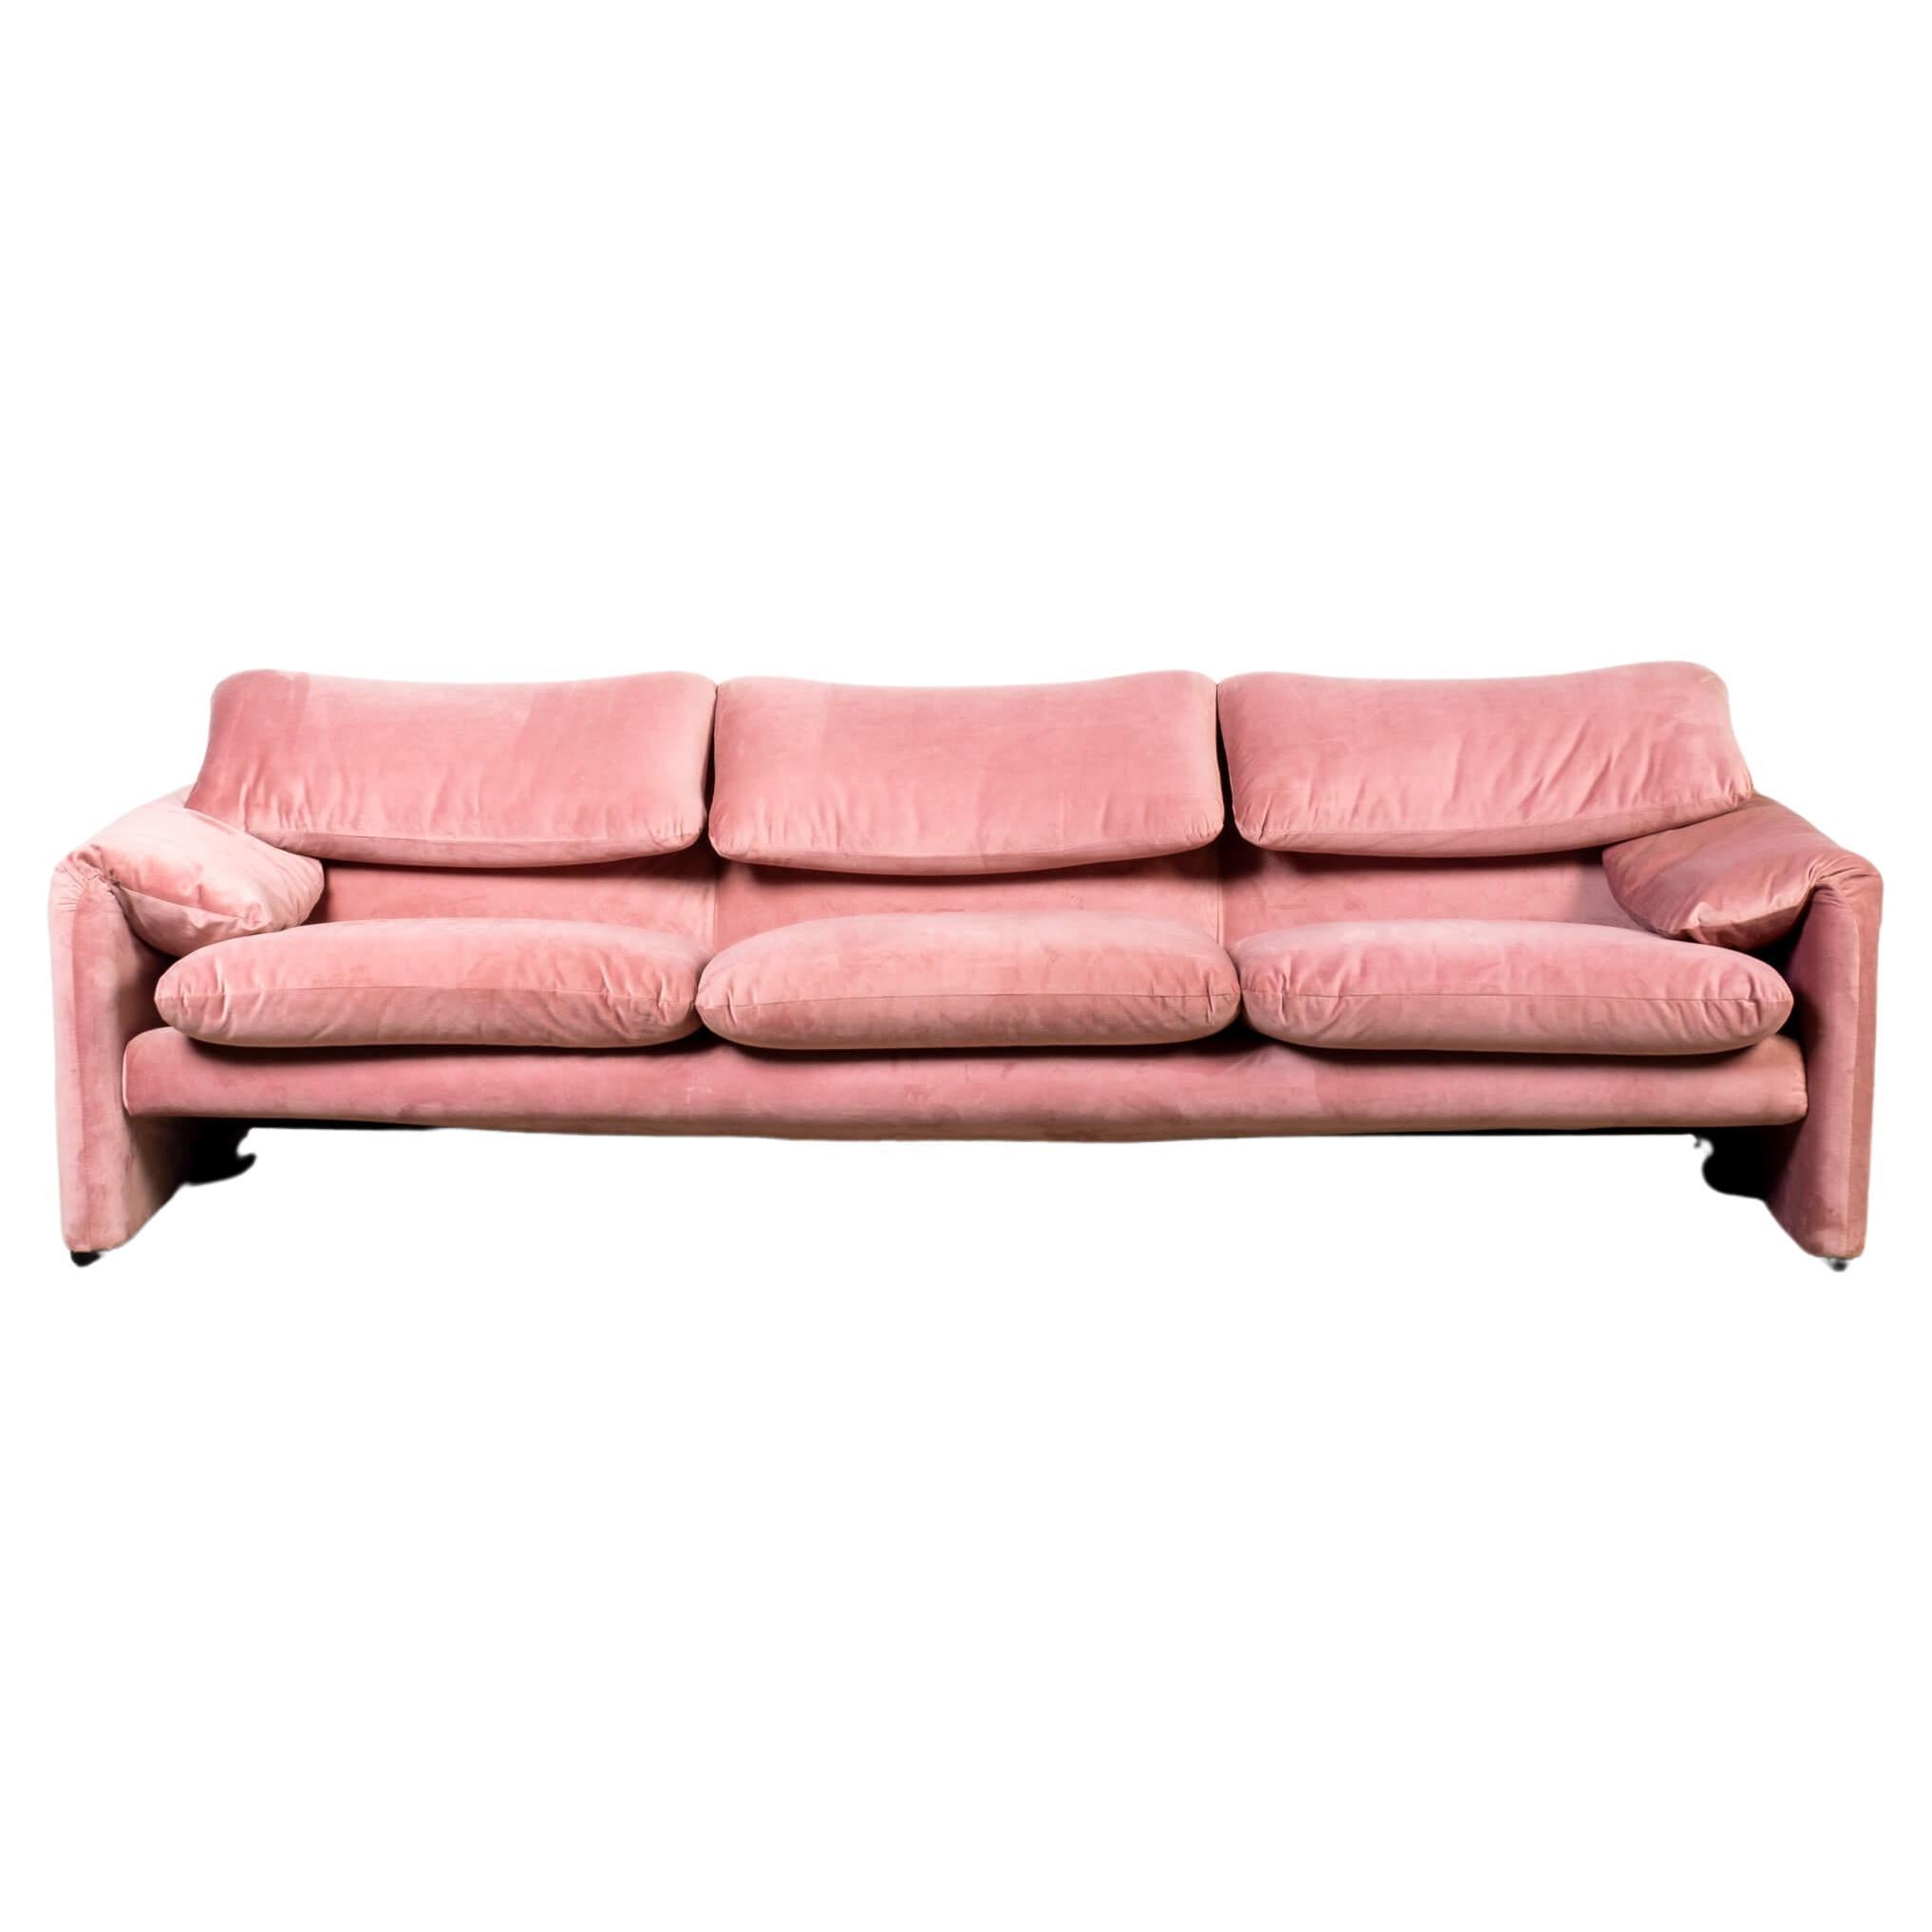 Maralunga 3-Seater Sofa, Newly Reupholstered in Pink Velvet